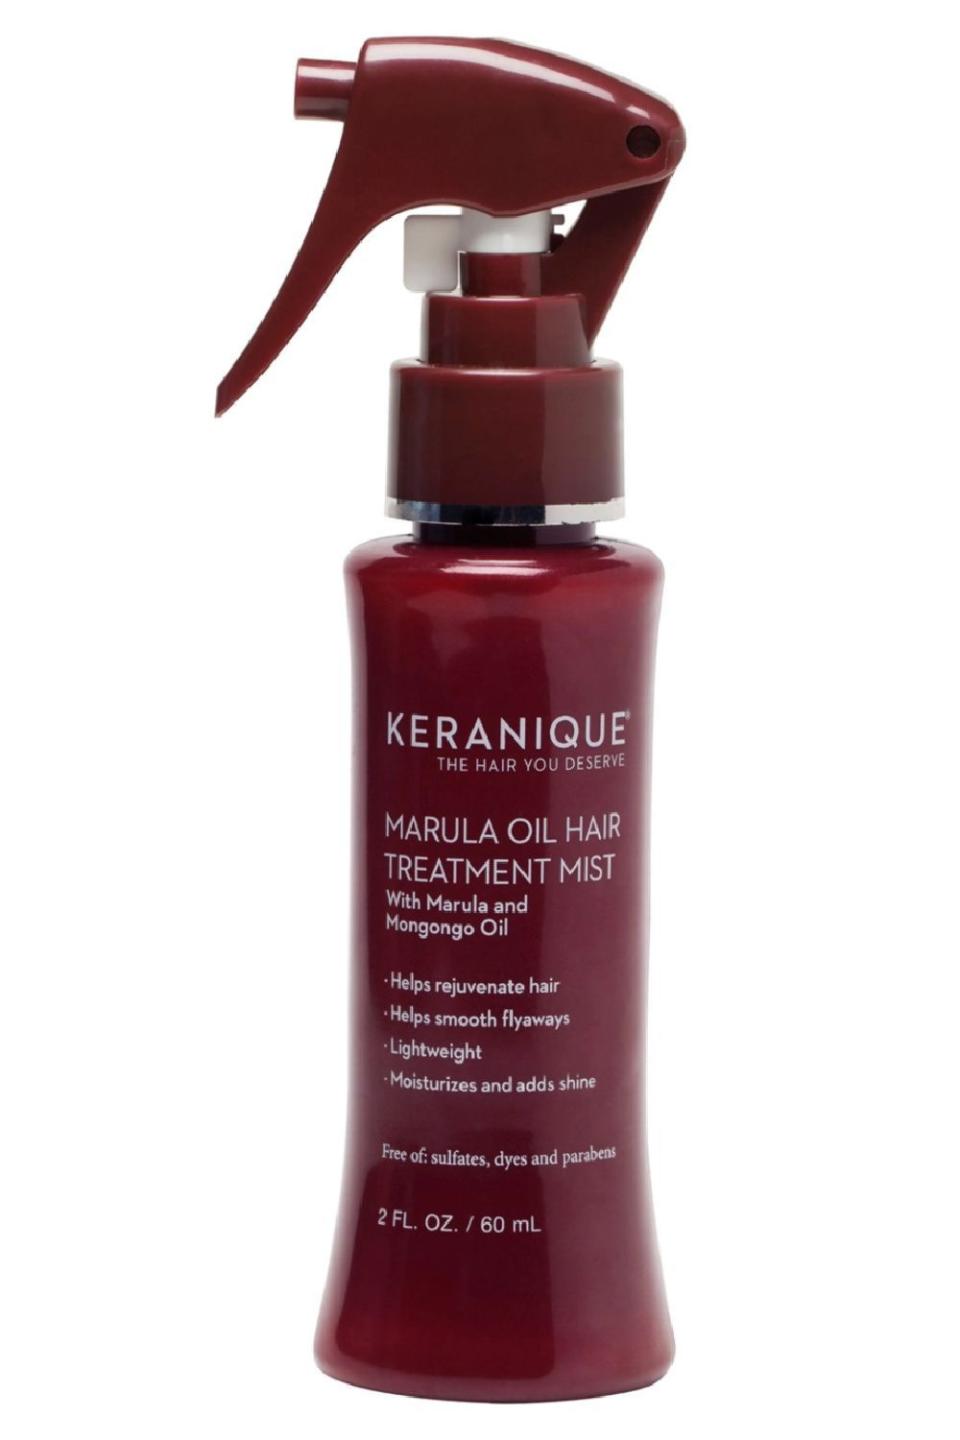 12) Keranique Marula Oil Hair Treatment Mist